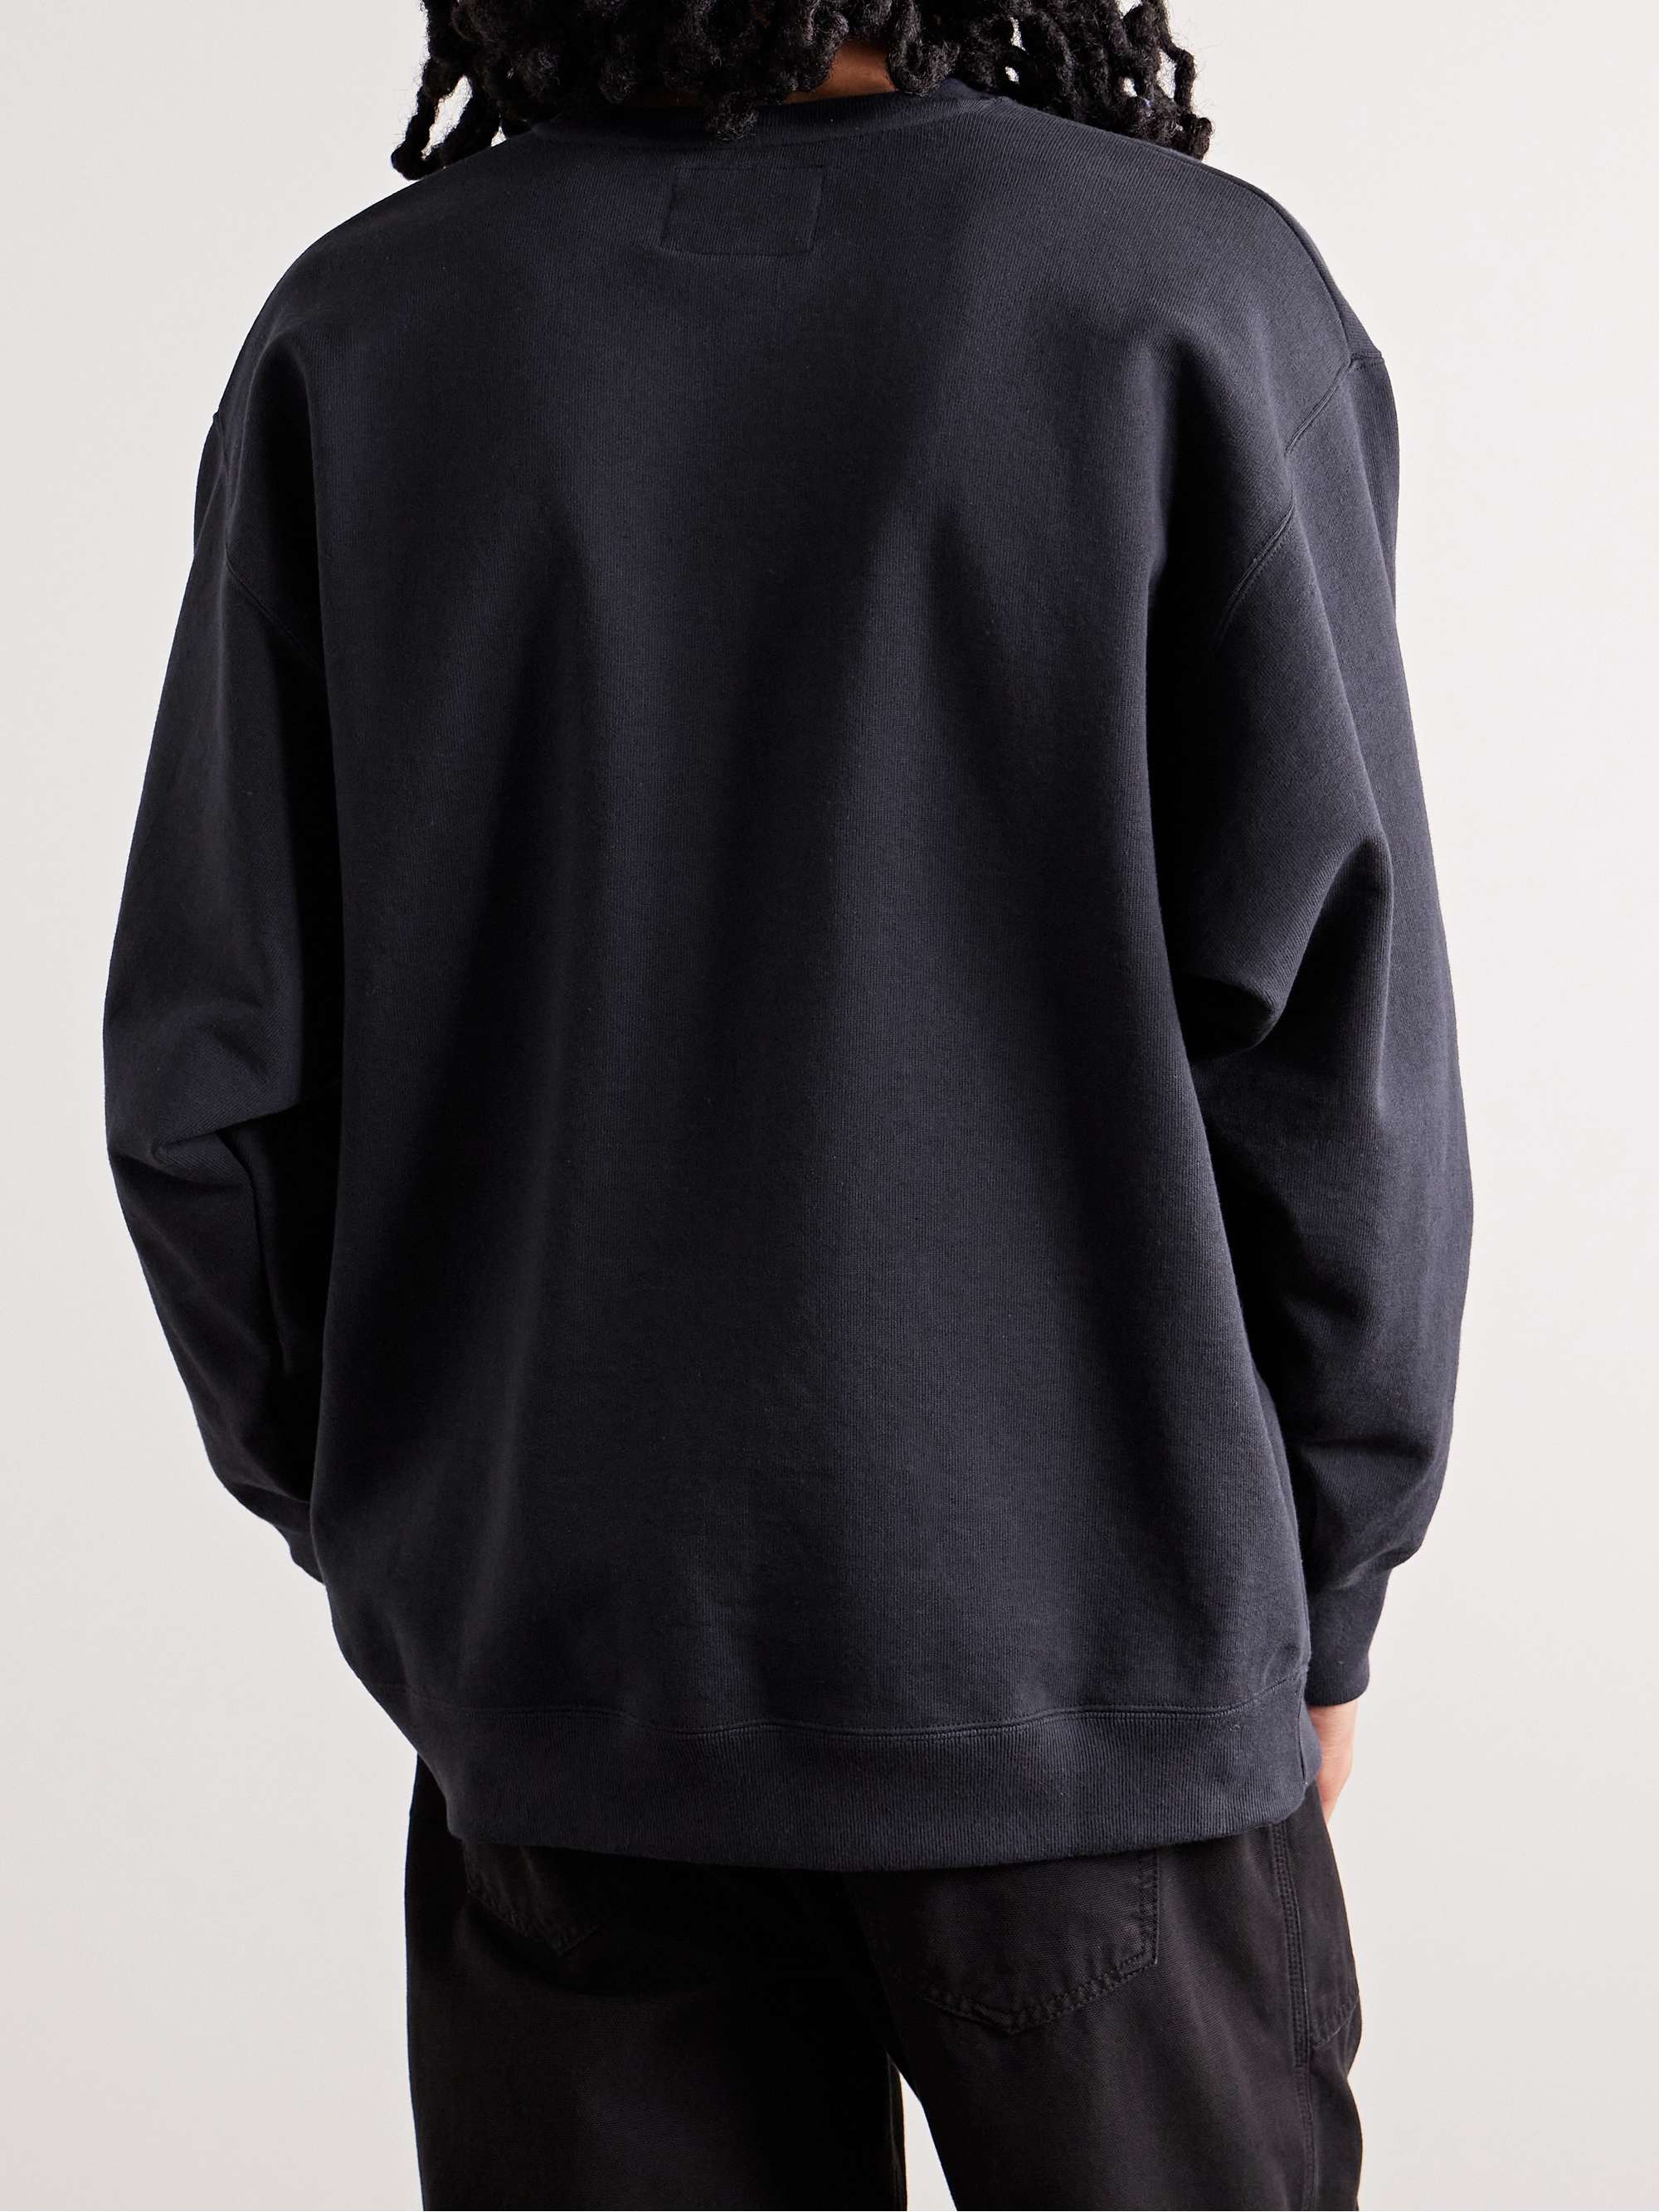 WTAPS® Logo-Print Cotton-Jersey Sweatshirt